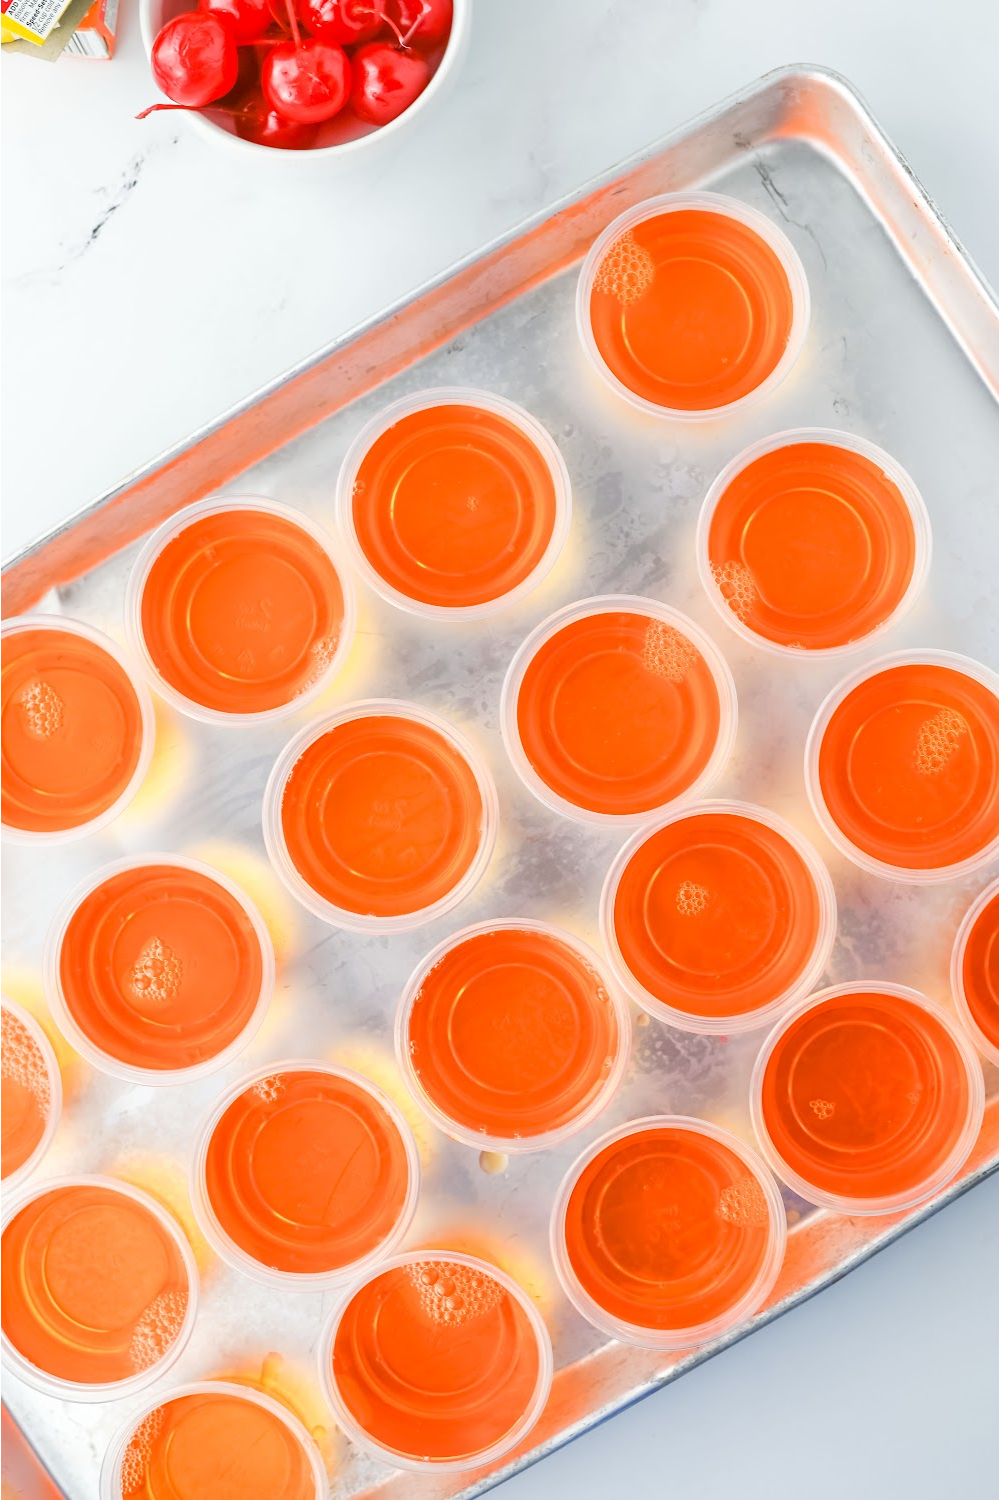 chill jello shots in the refrigerator on a tray.